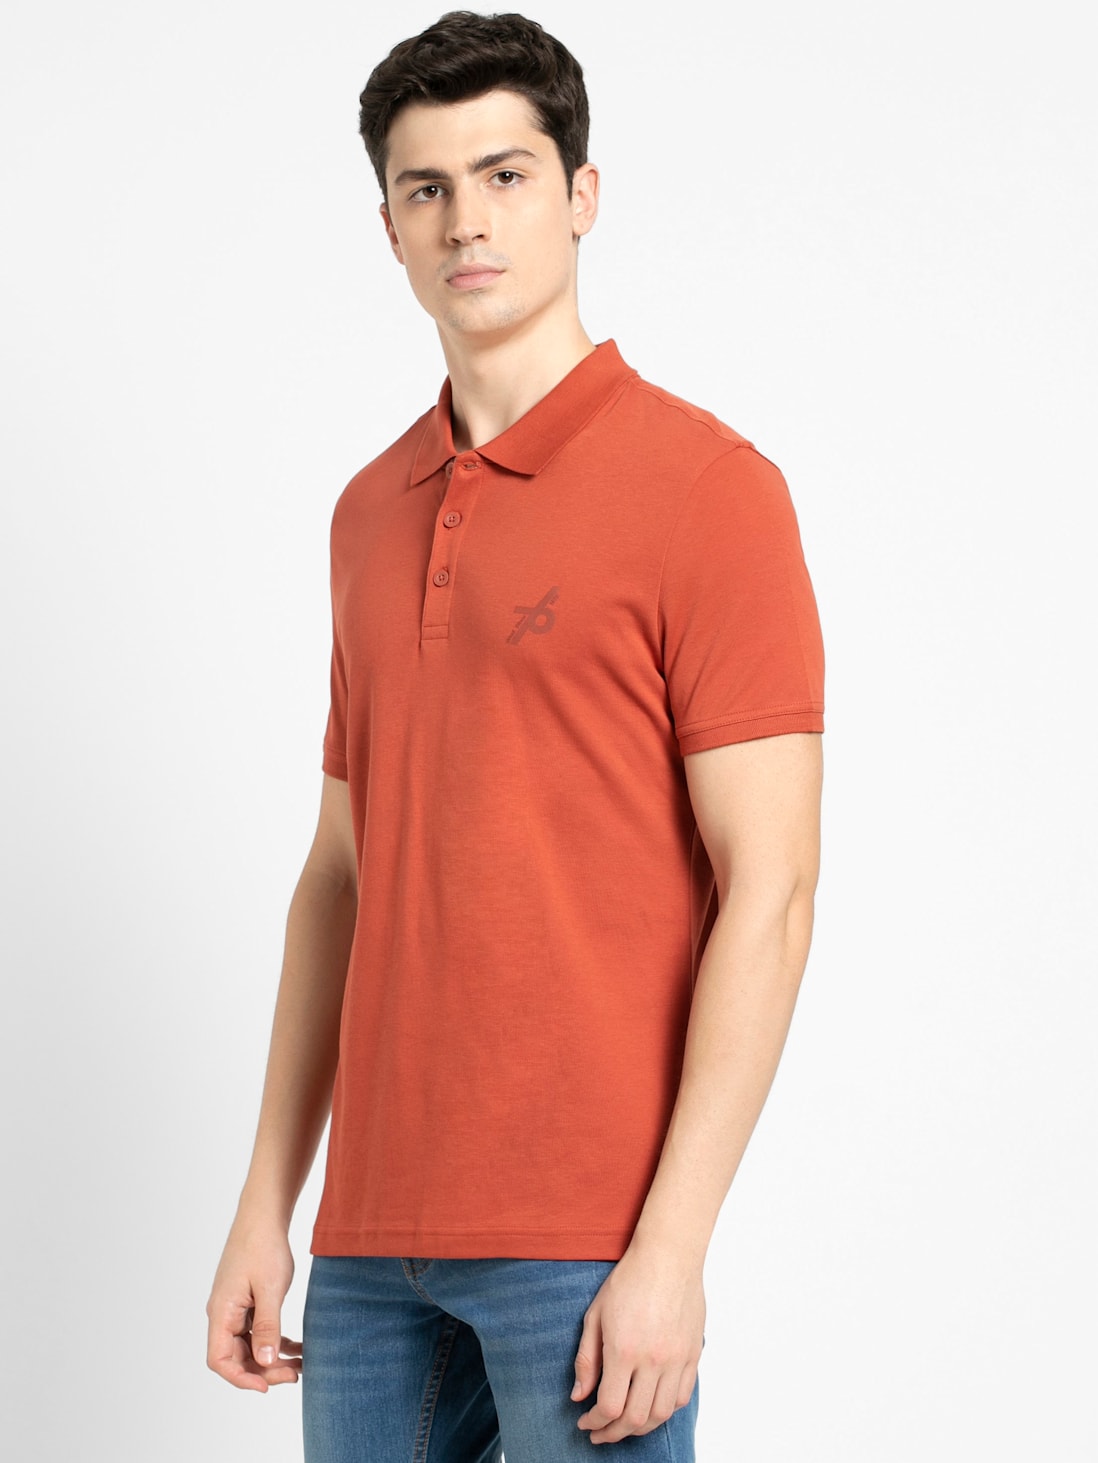 Cinnabar Solid Half Sleeve Polo Sports T Shirt For Men 3911 Jockey India